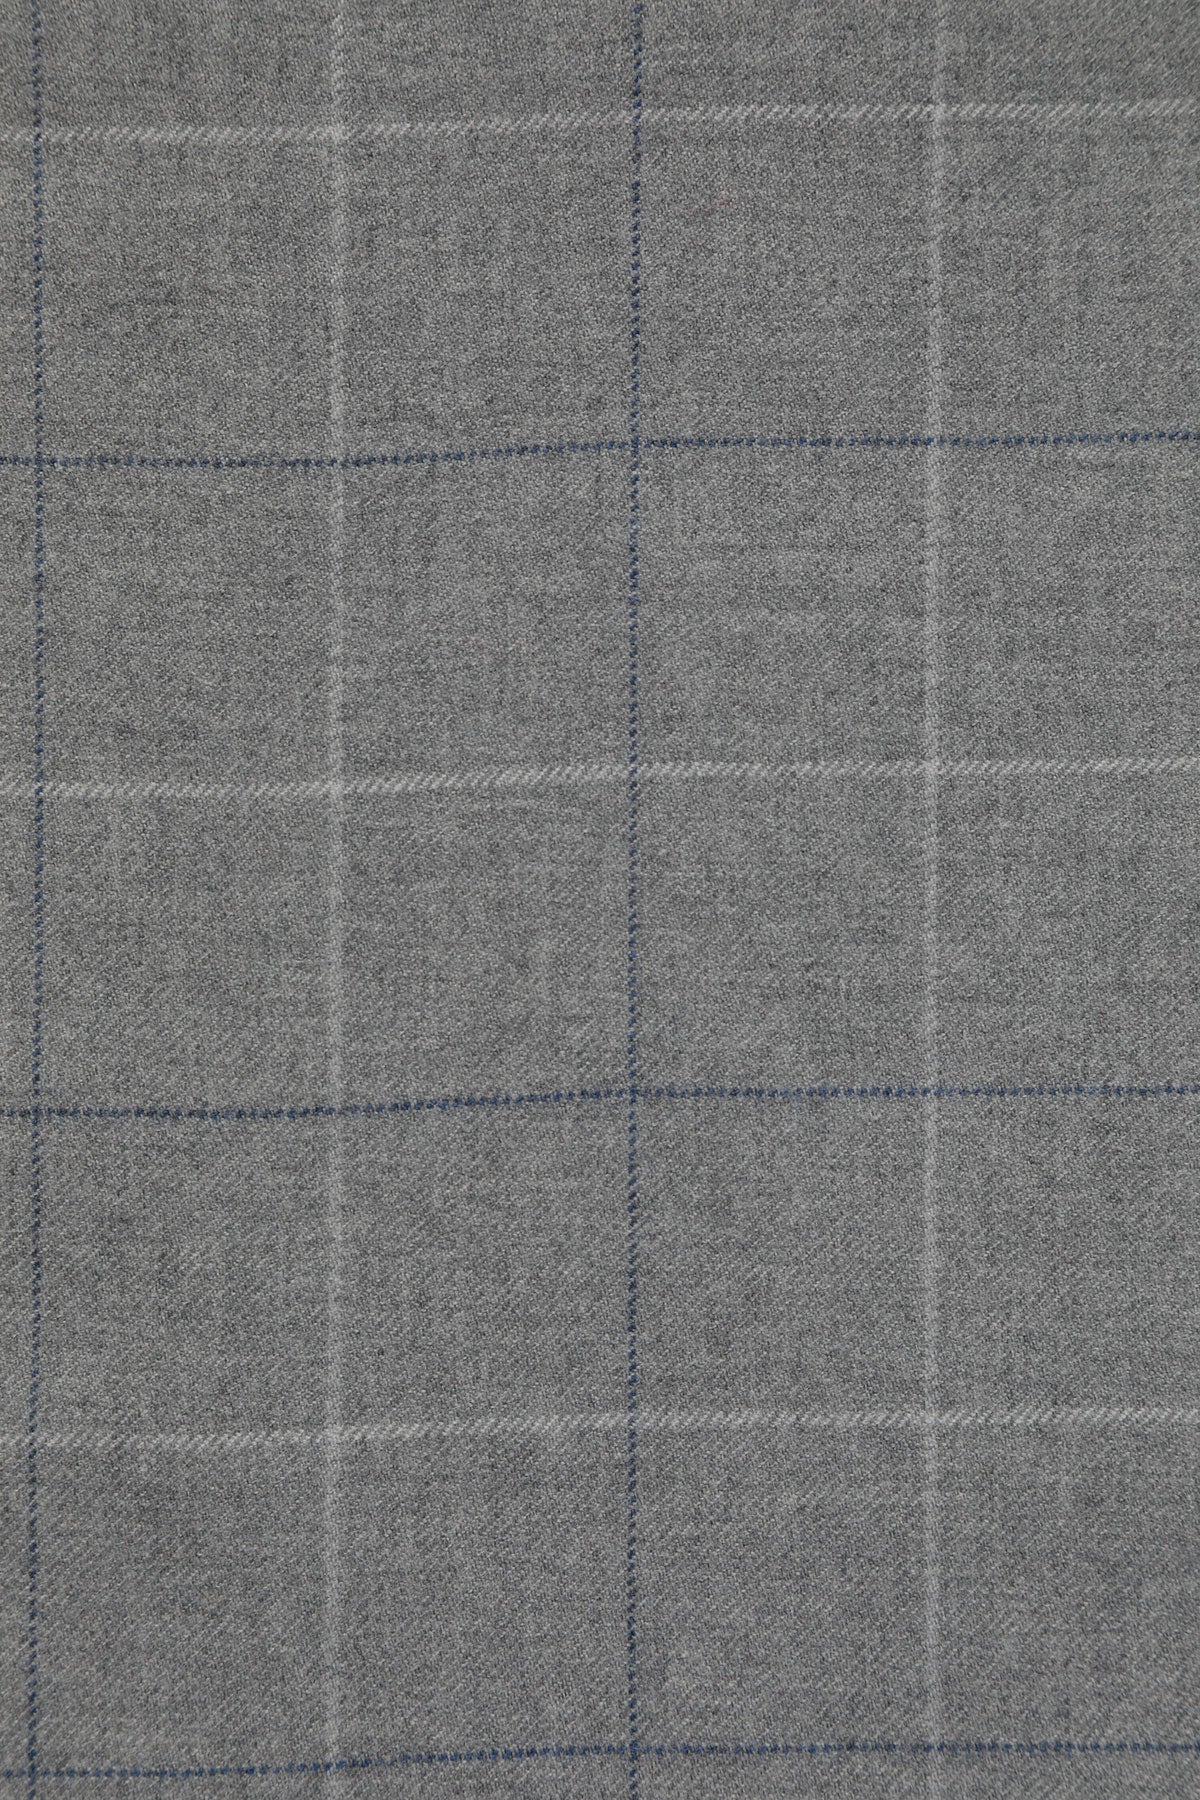 Seren Extra Fine Merino Wool Fabric in Shadow 694424206